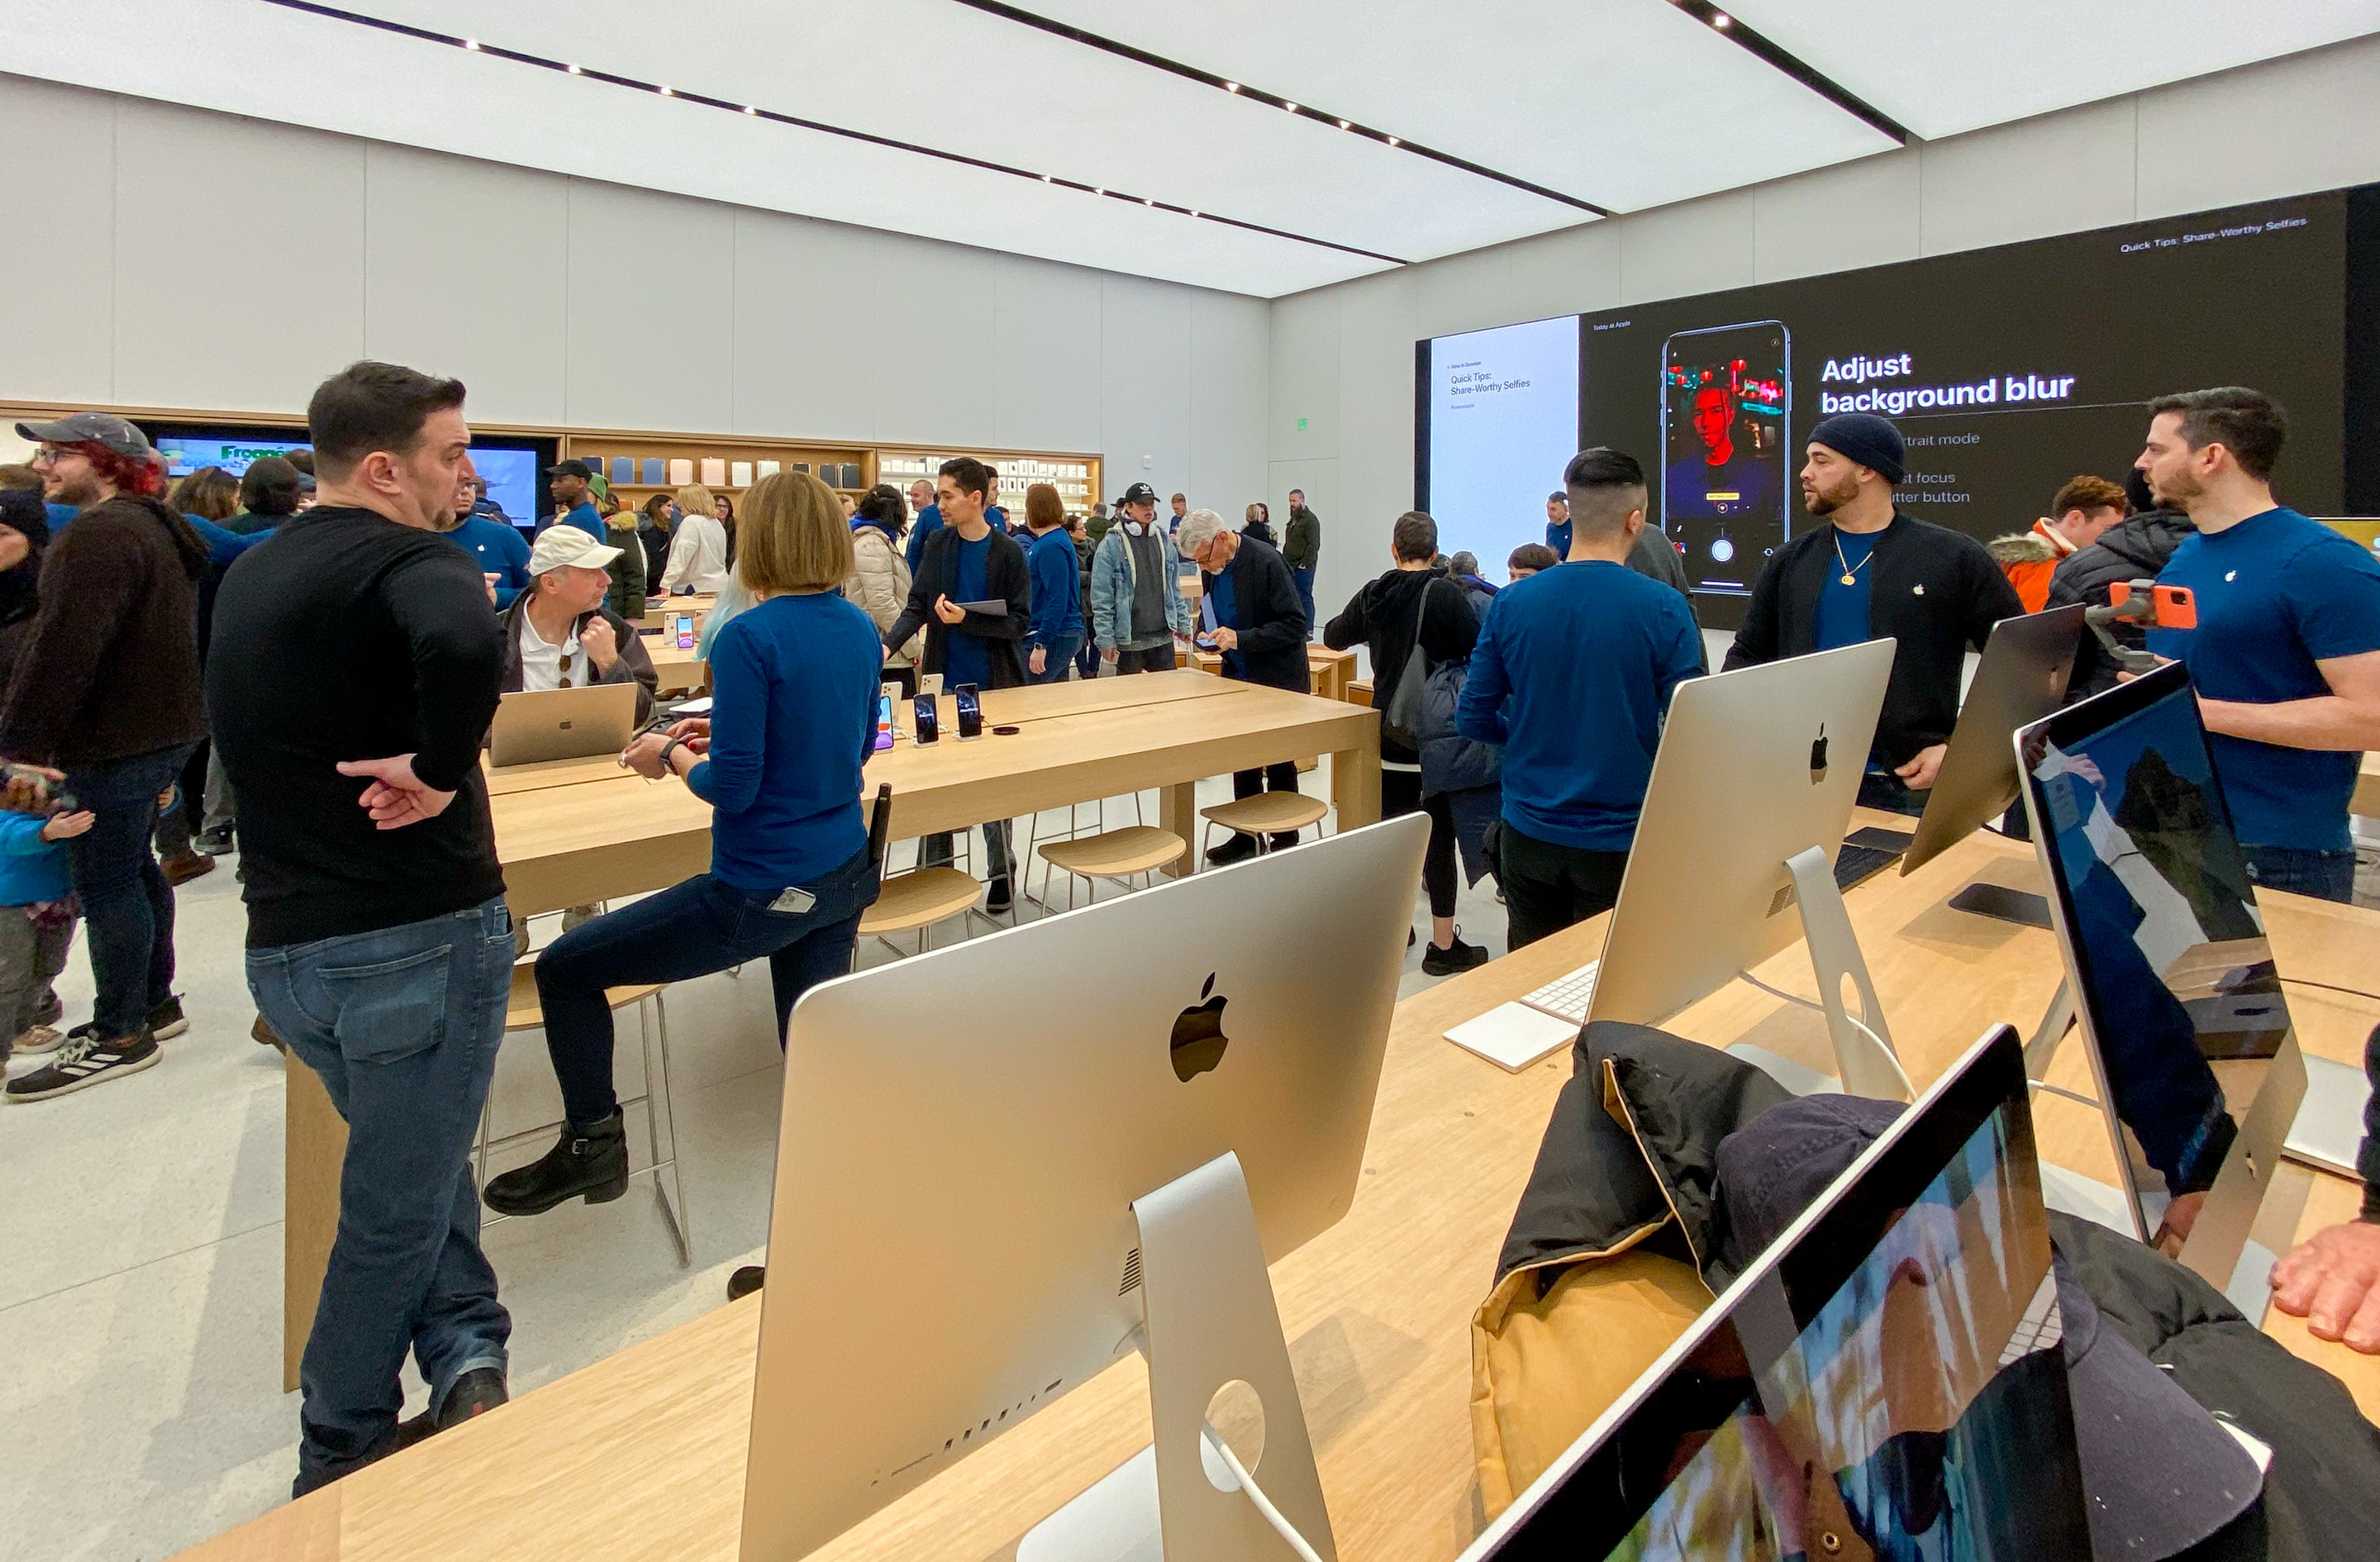 New Haven - Apple Store - Apple